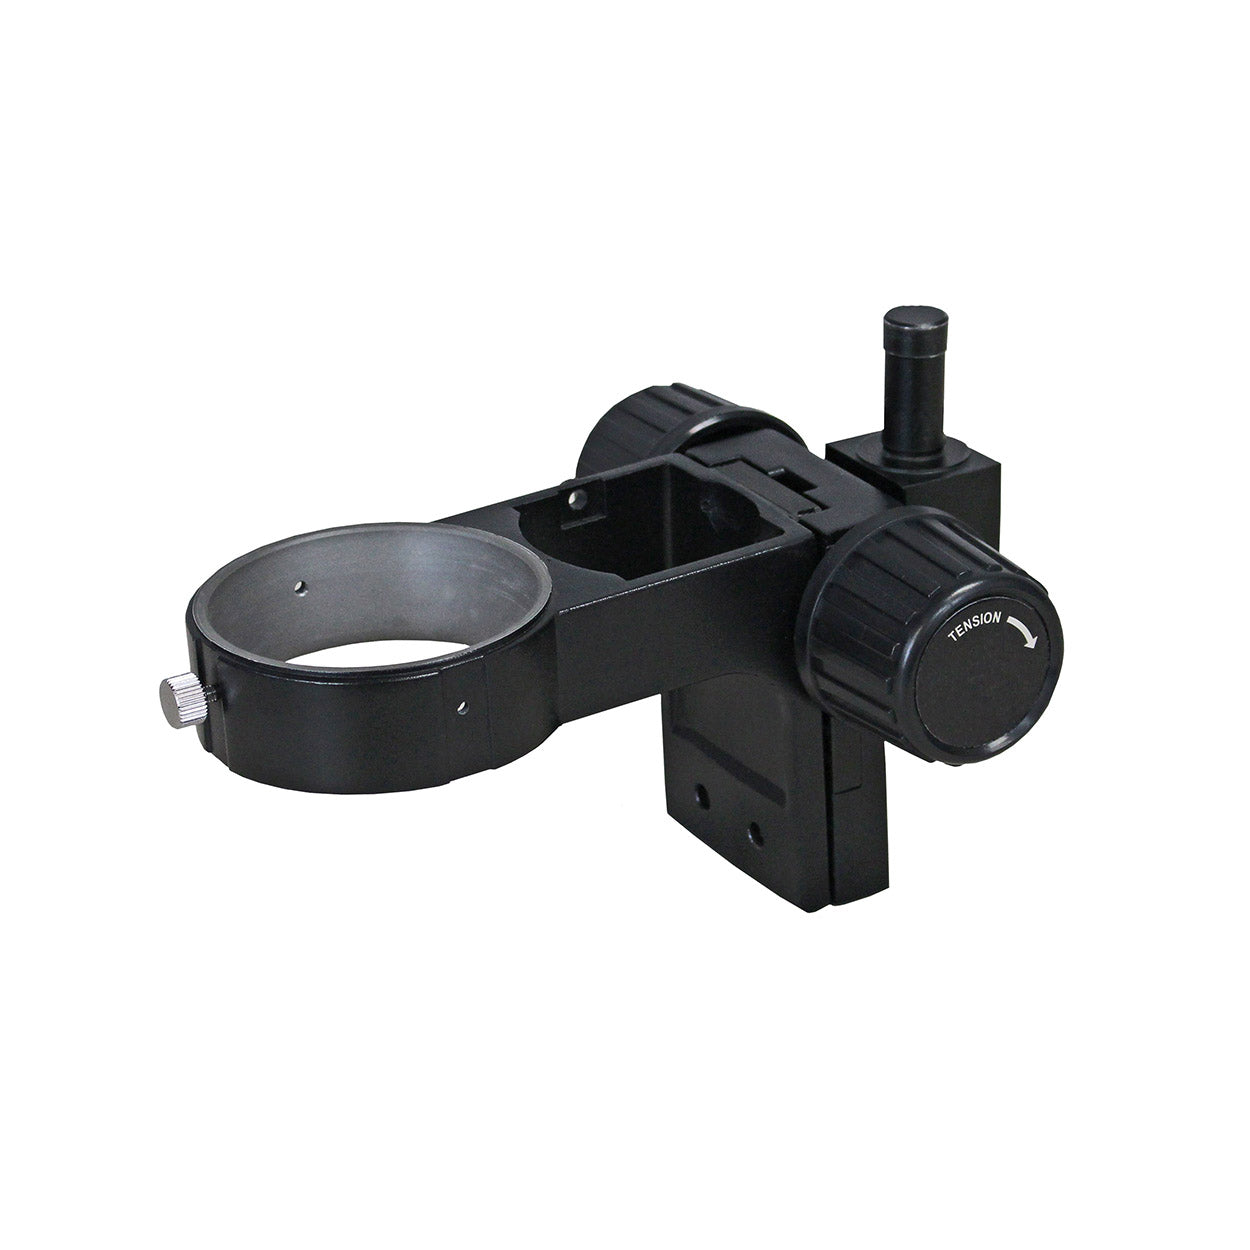 Accu-Scope Bonder Arm For Stereo Microscopes